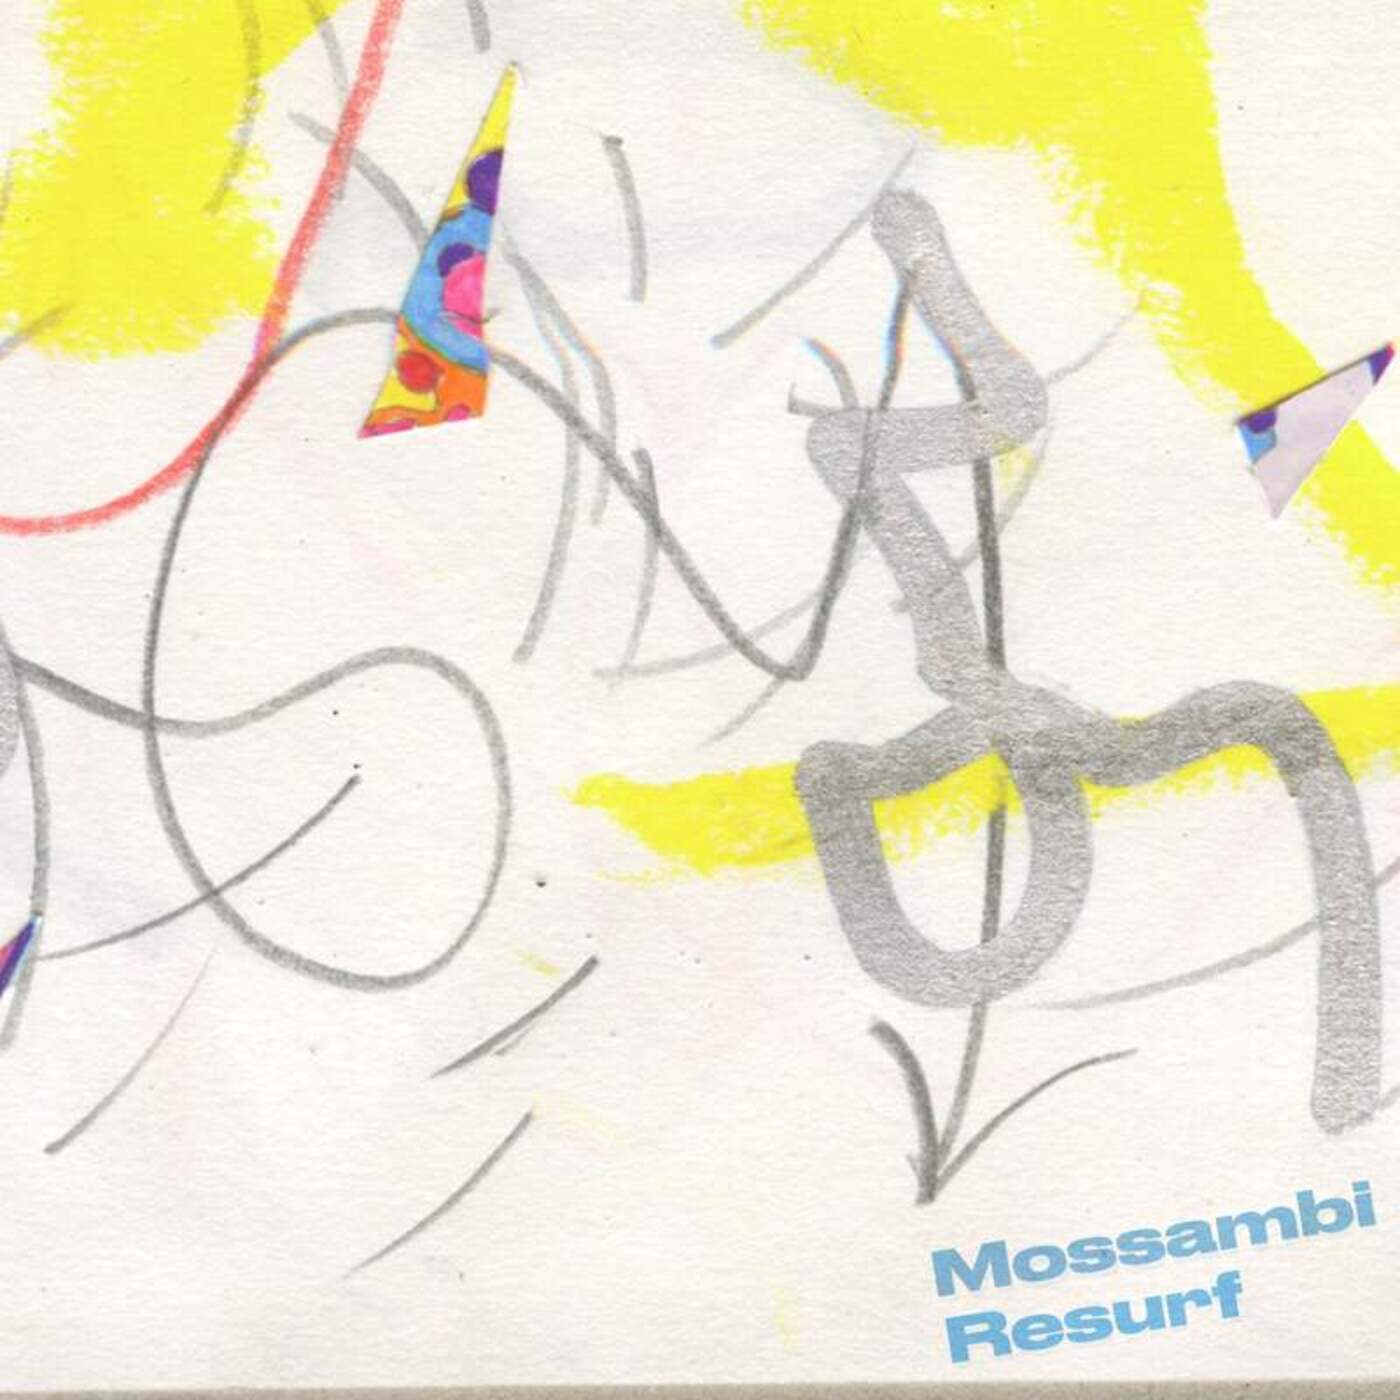 image cover: Mossambi - Resurf / ACEN044